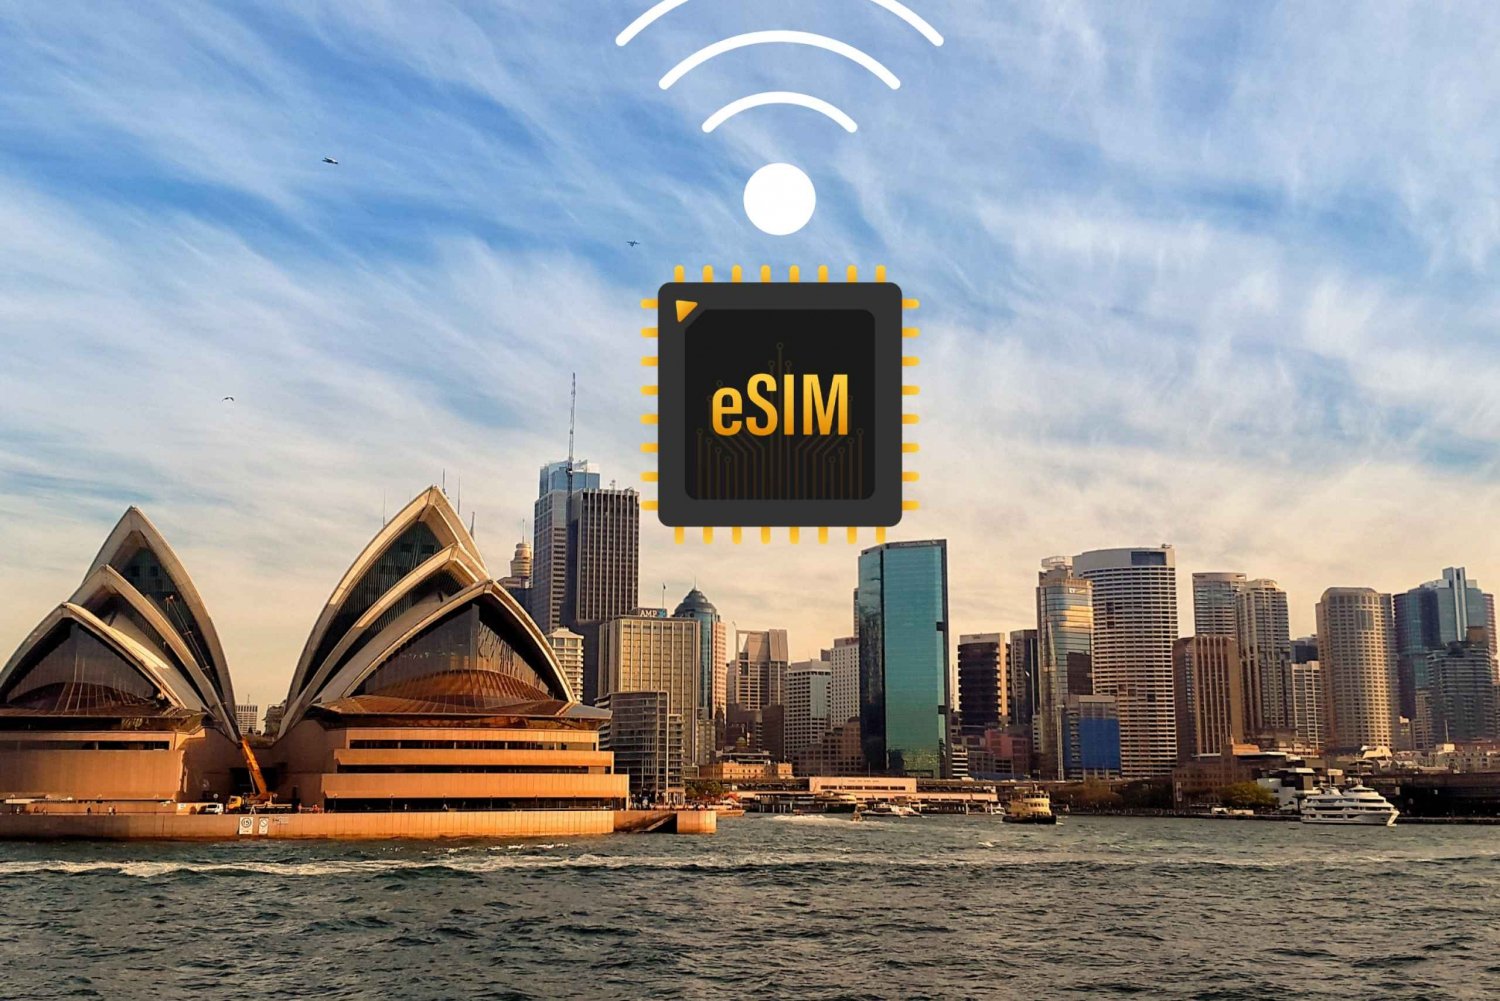 Sydney: eSIM Internet Data Plan for Australia 4G/5G